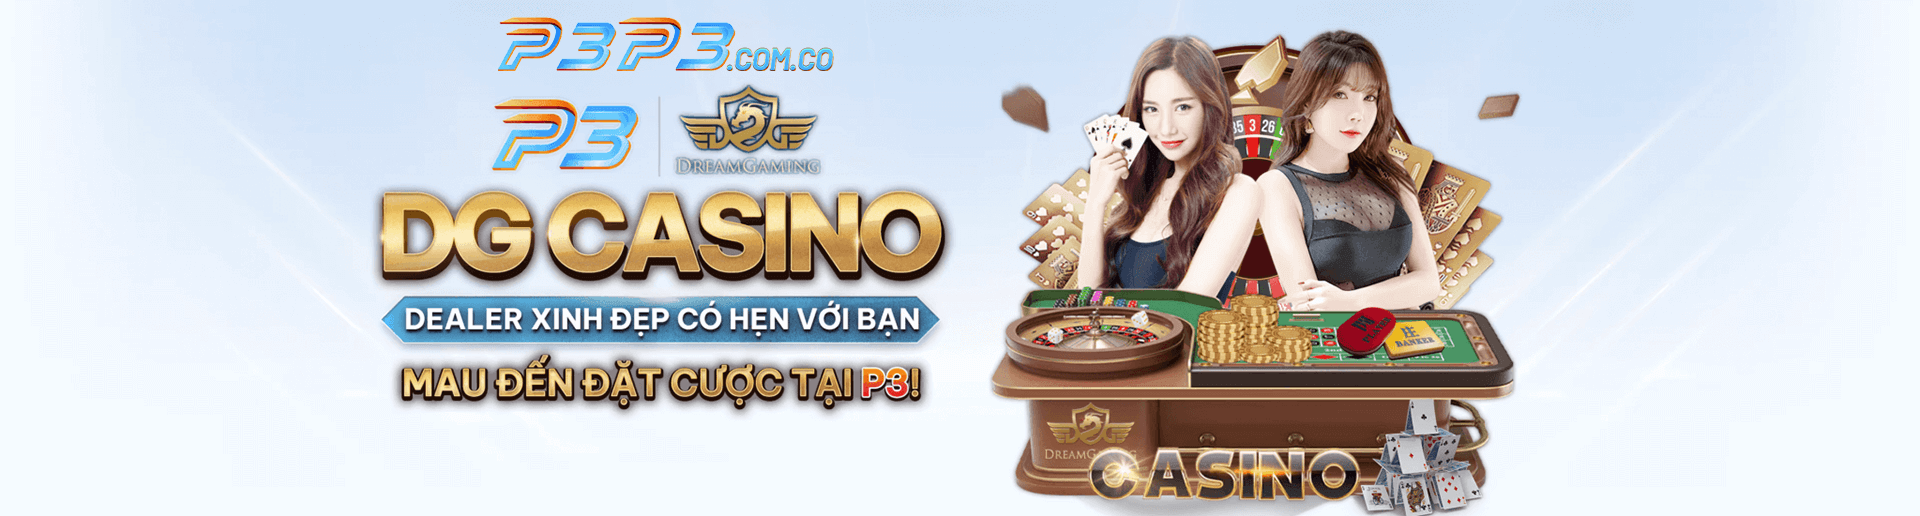 casino p3